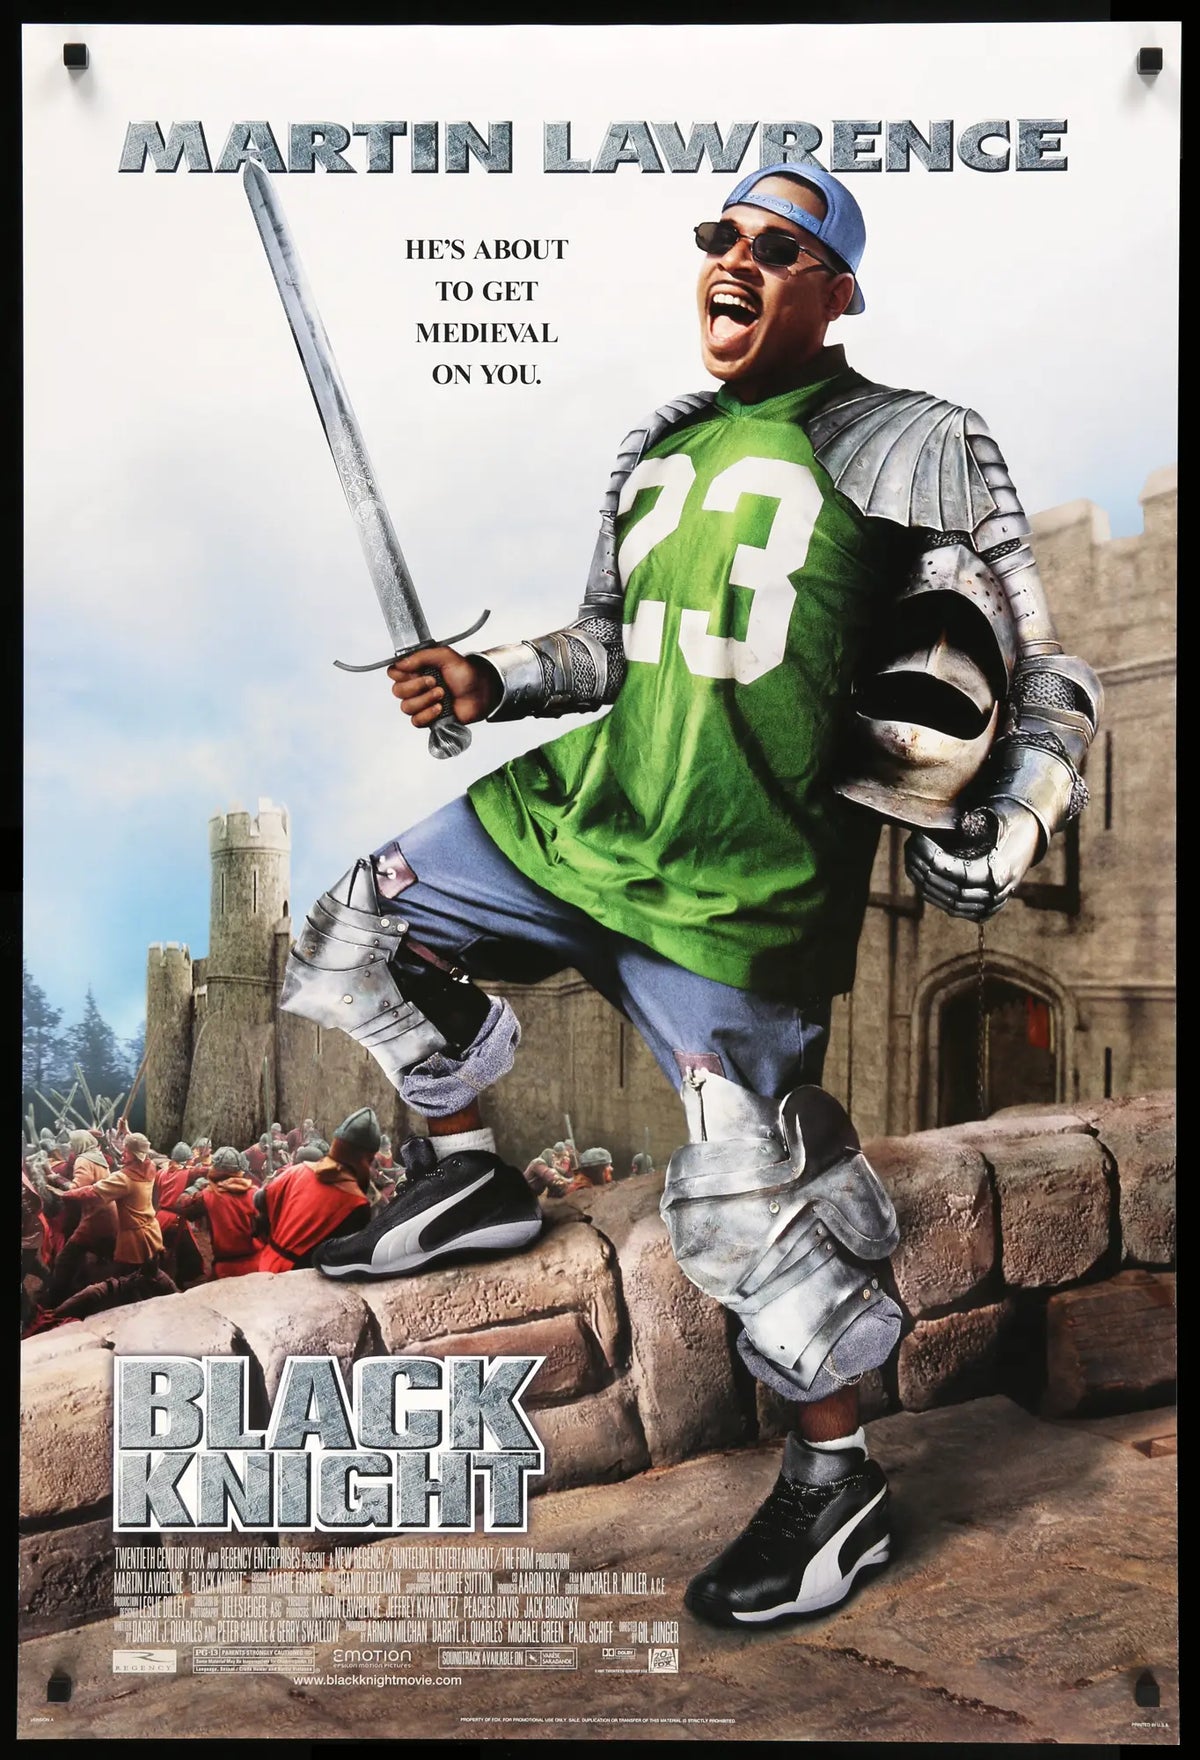 Black Knight (2001) original movie poster for sale at Original Film Art